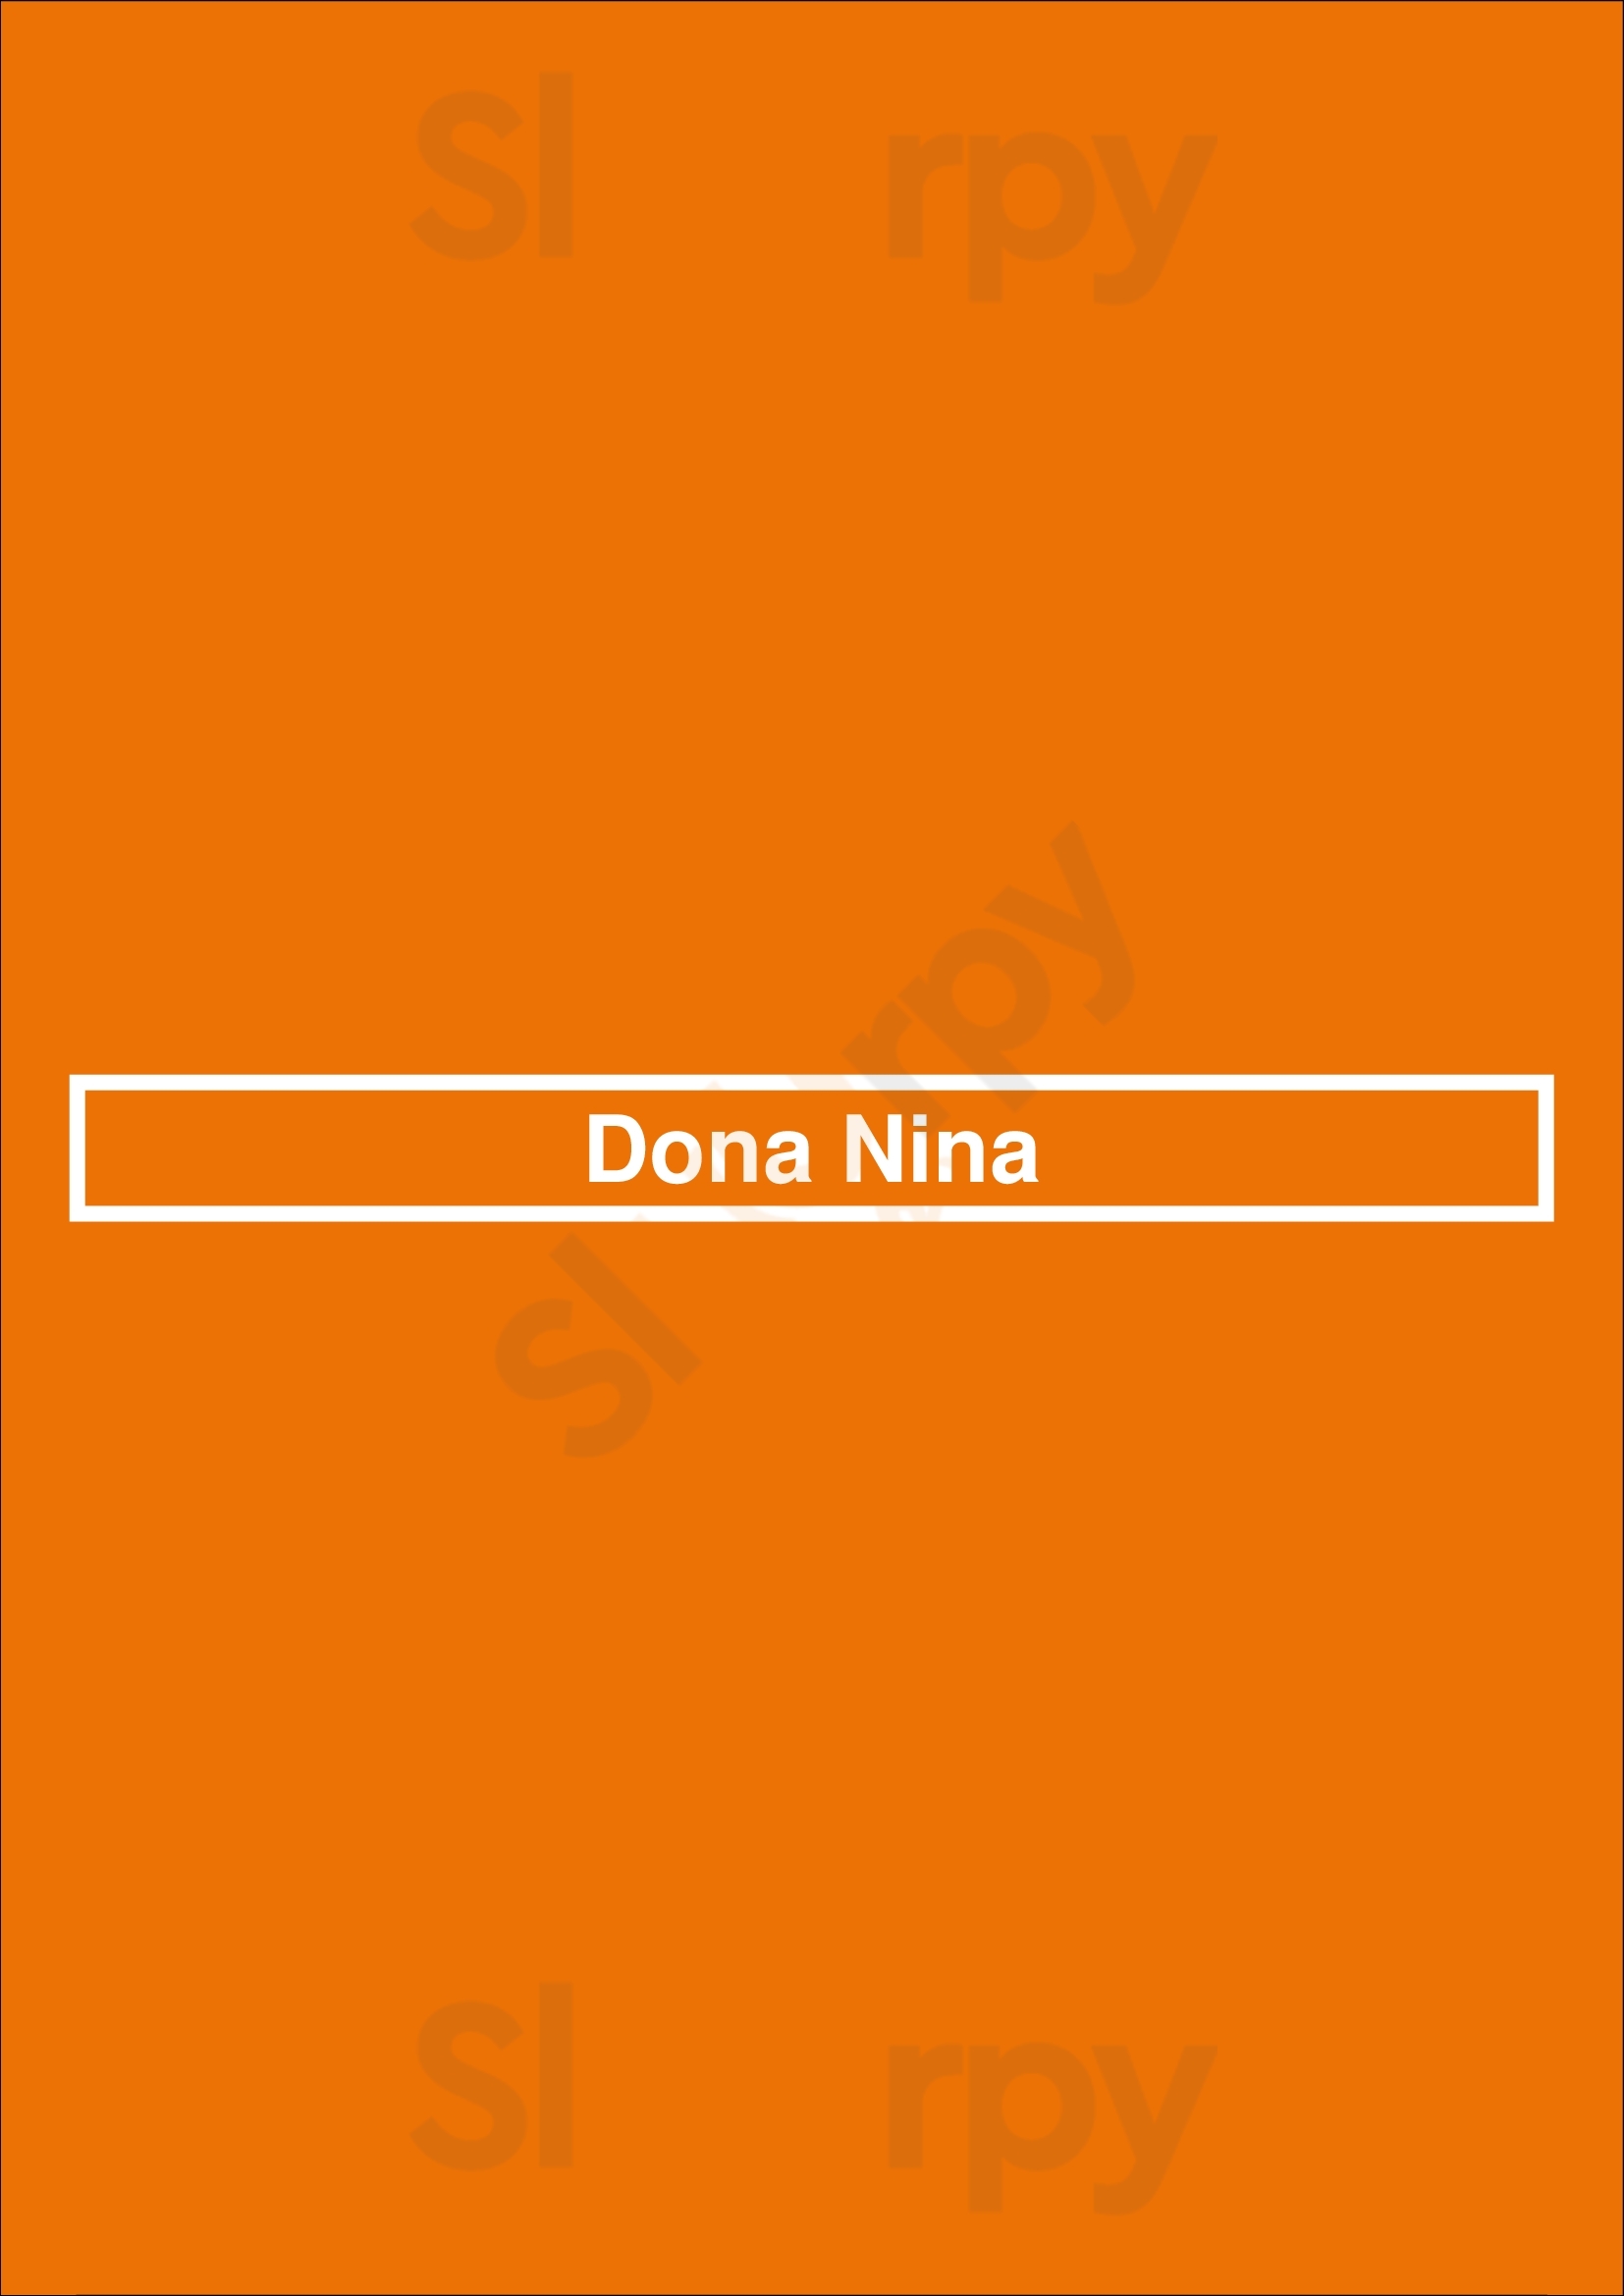 Dona Nina Funchal Menu - 1